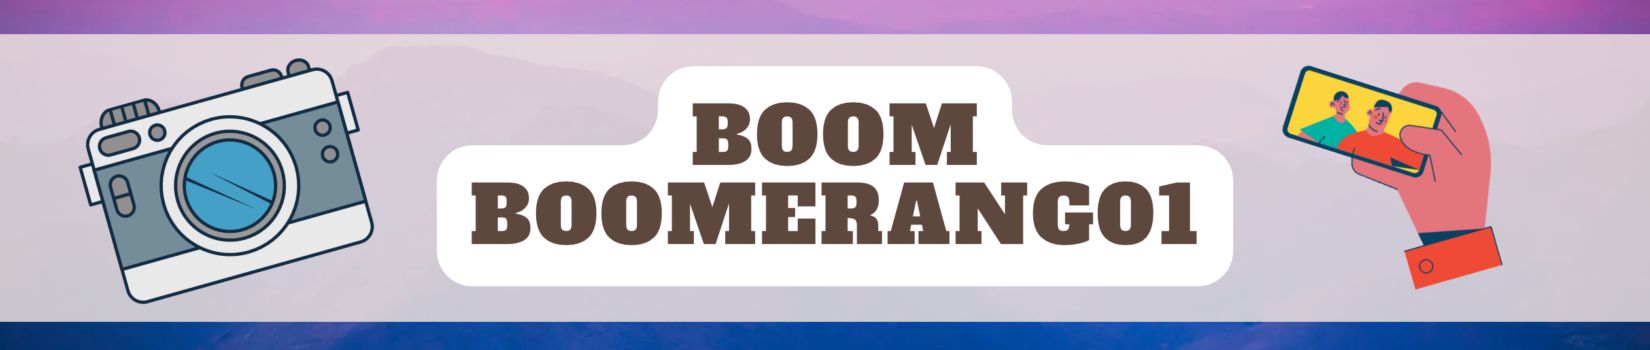 boomboomerang01